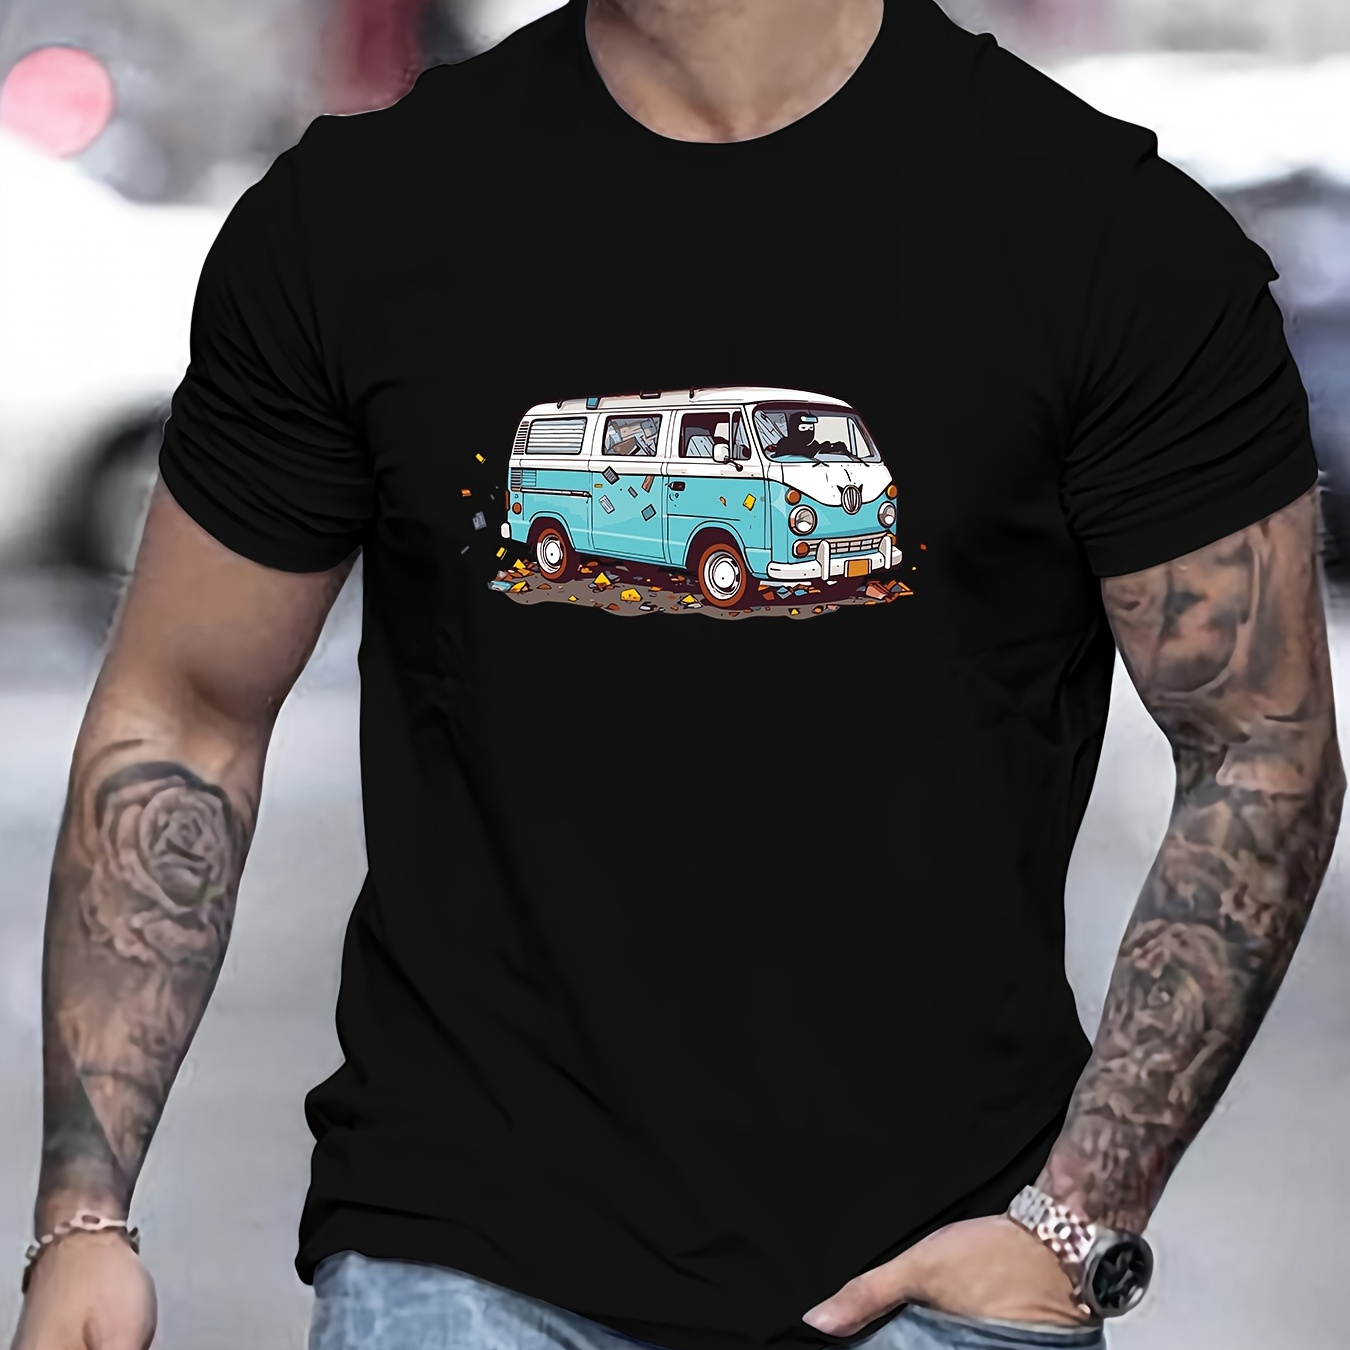 

Bus Print T-shirt - Casual Short Sleeve Tees, Men's Comfy Crew Neck Tops For Summer